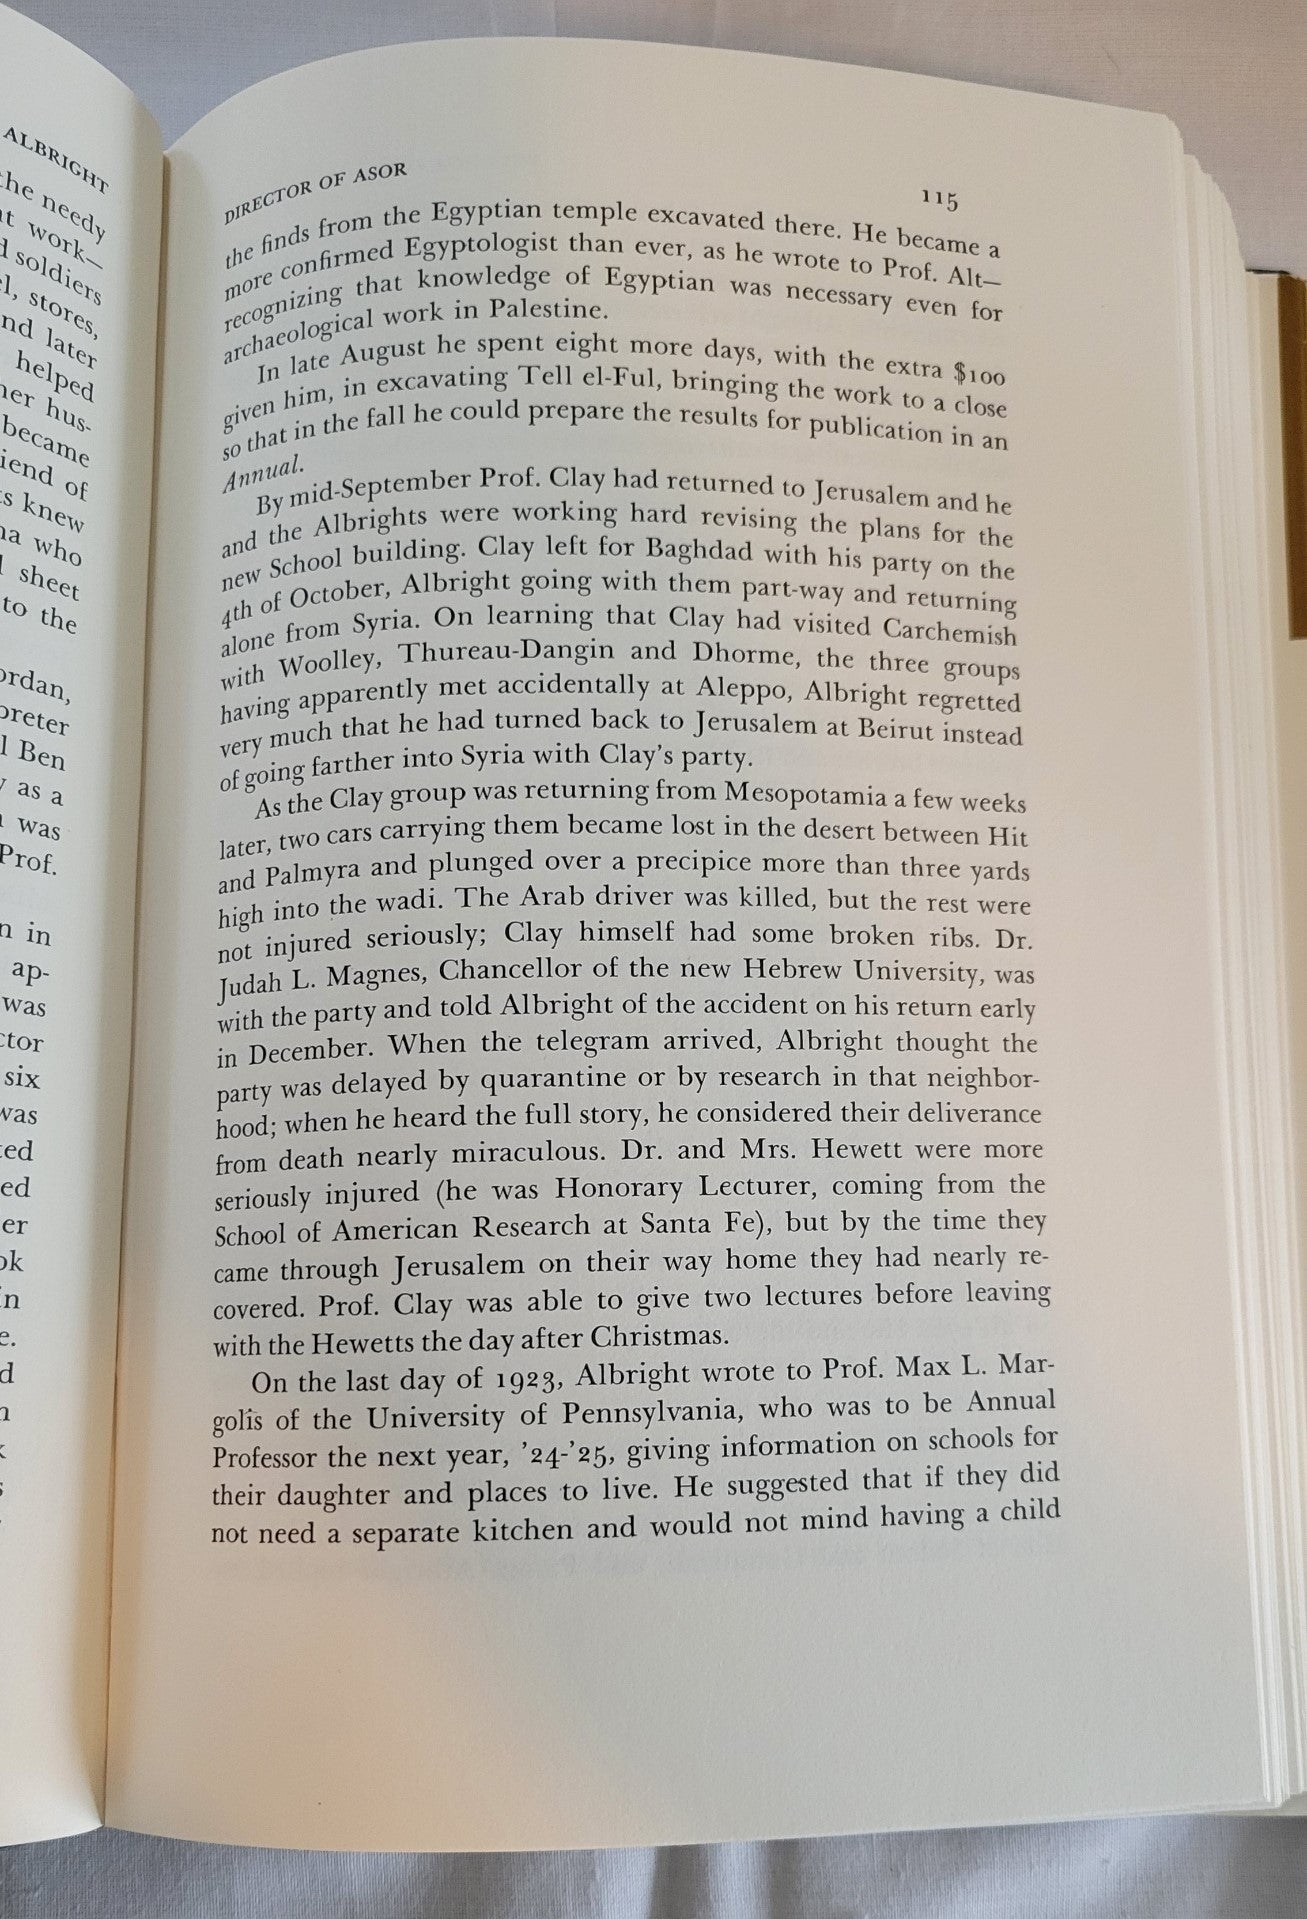 Used book for sale " William Foxwell Albright: A Twentieth-Century Genius” by Leona Glidden Running and David Noel Freedman. Page 115